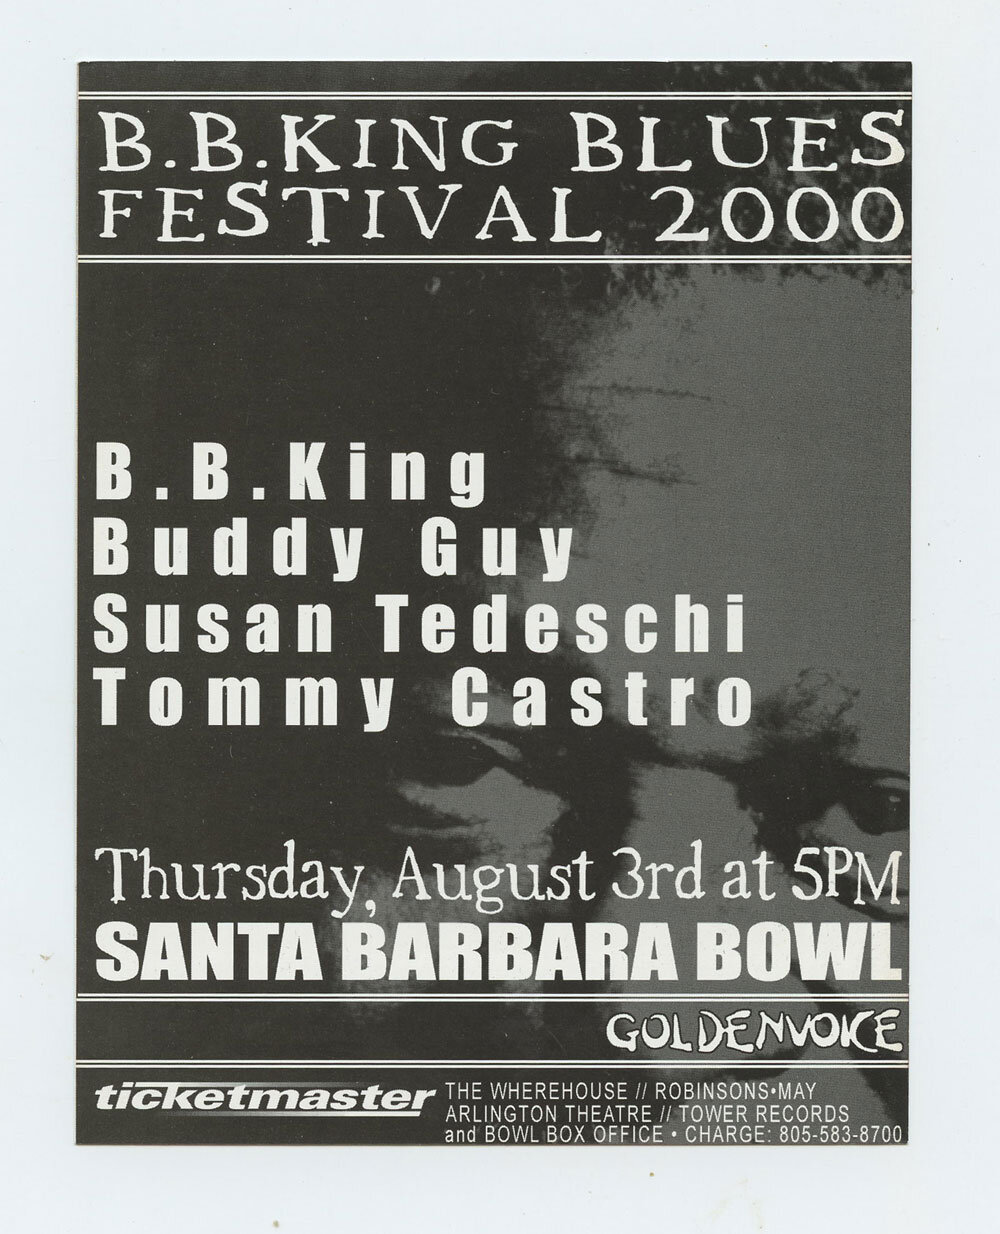 B.B. King Buddy Guy Susan Tedeschi Tommy Castro Handbill 2000 Blues Festival